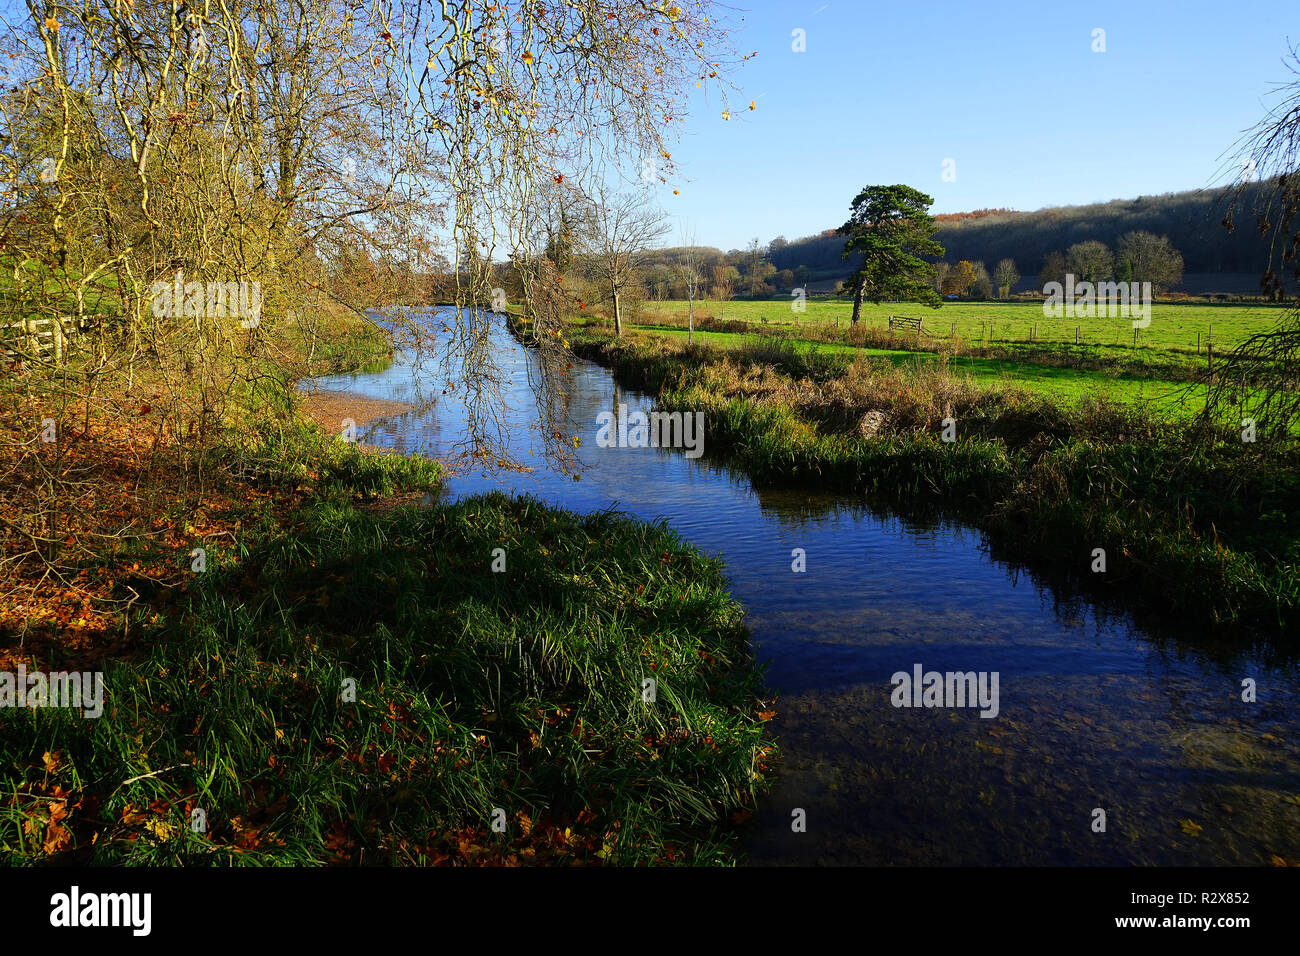 Latimer buckinghamshire hi-res stock photography and images - Alamy